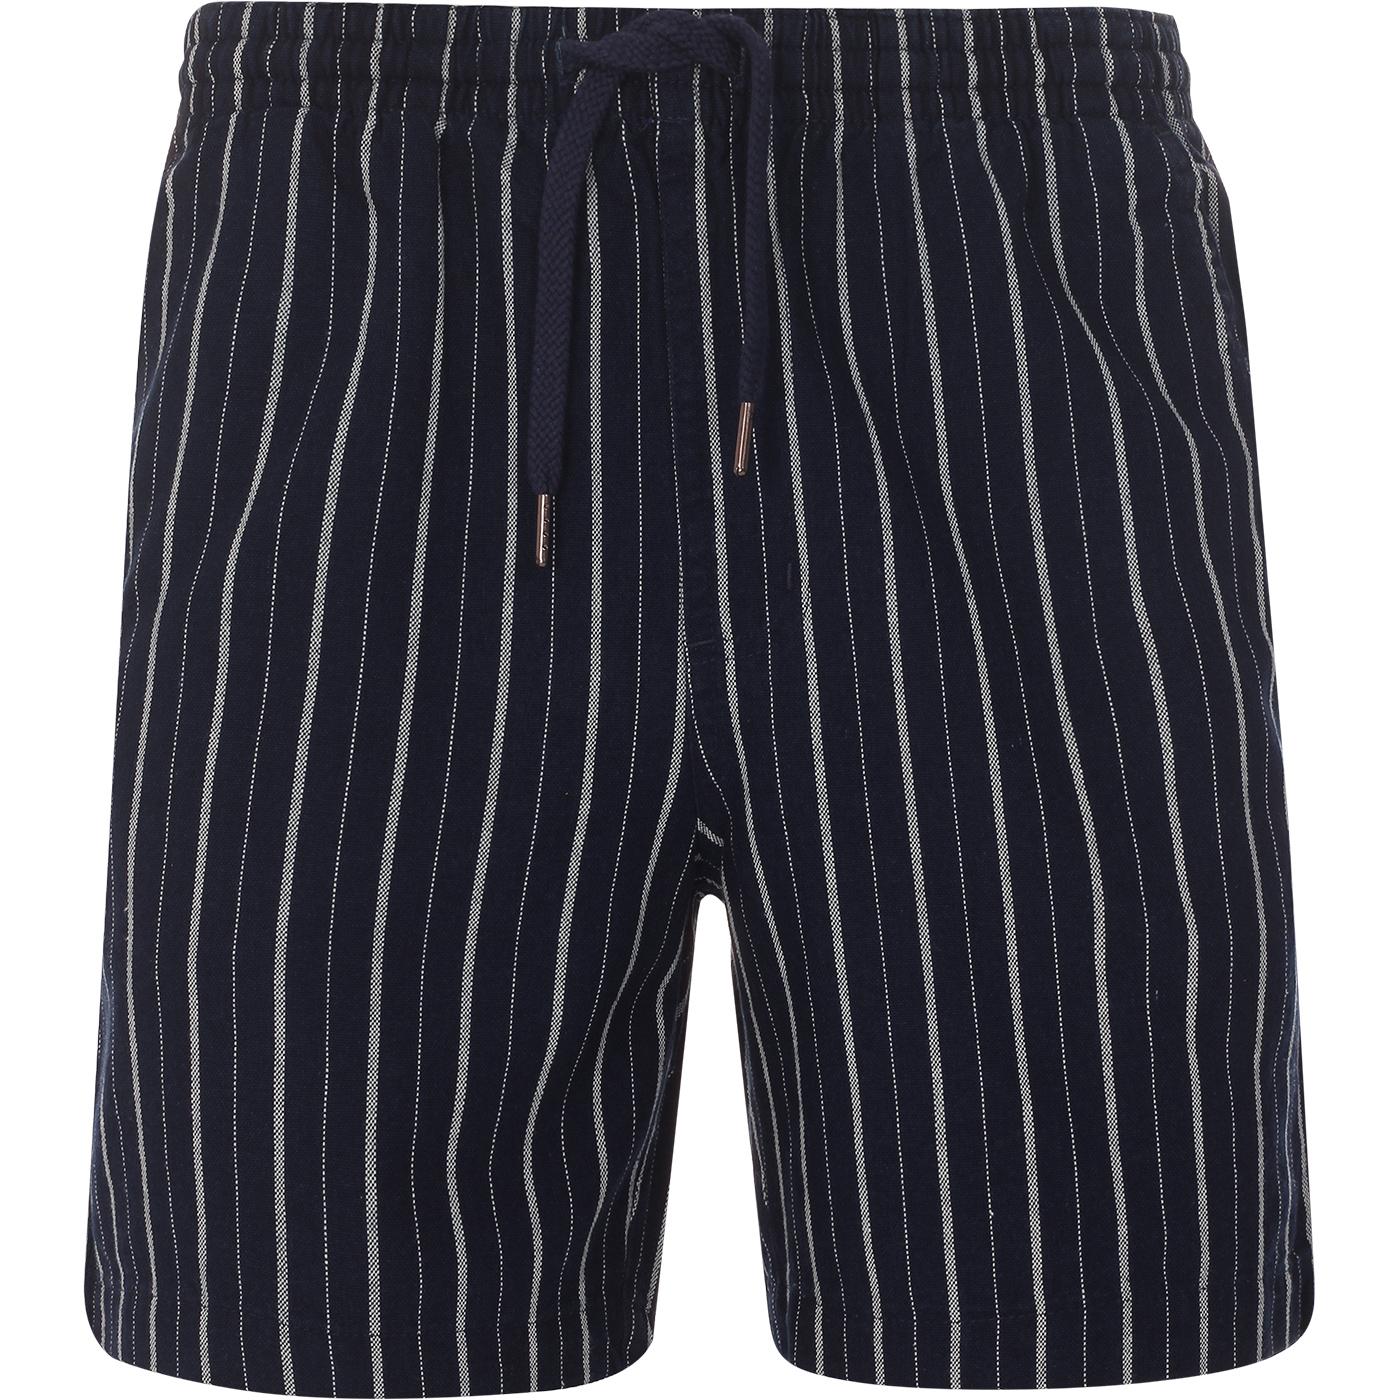 Redwald FARAH Indigo Stripe Retro 4 Pocket Shorts